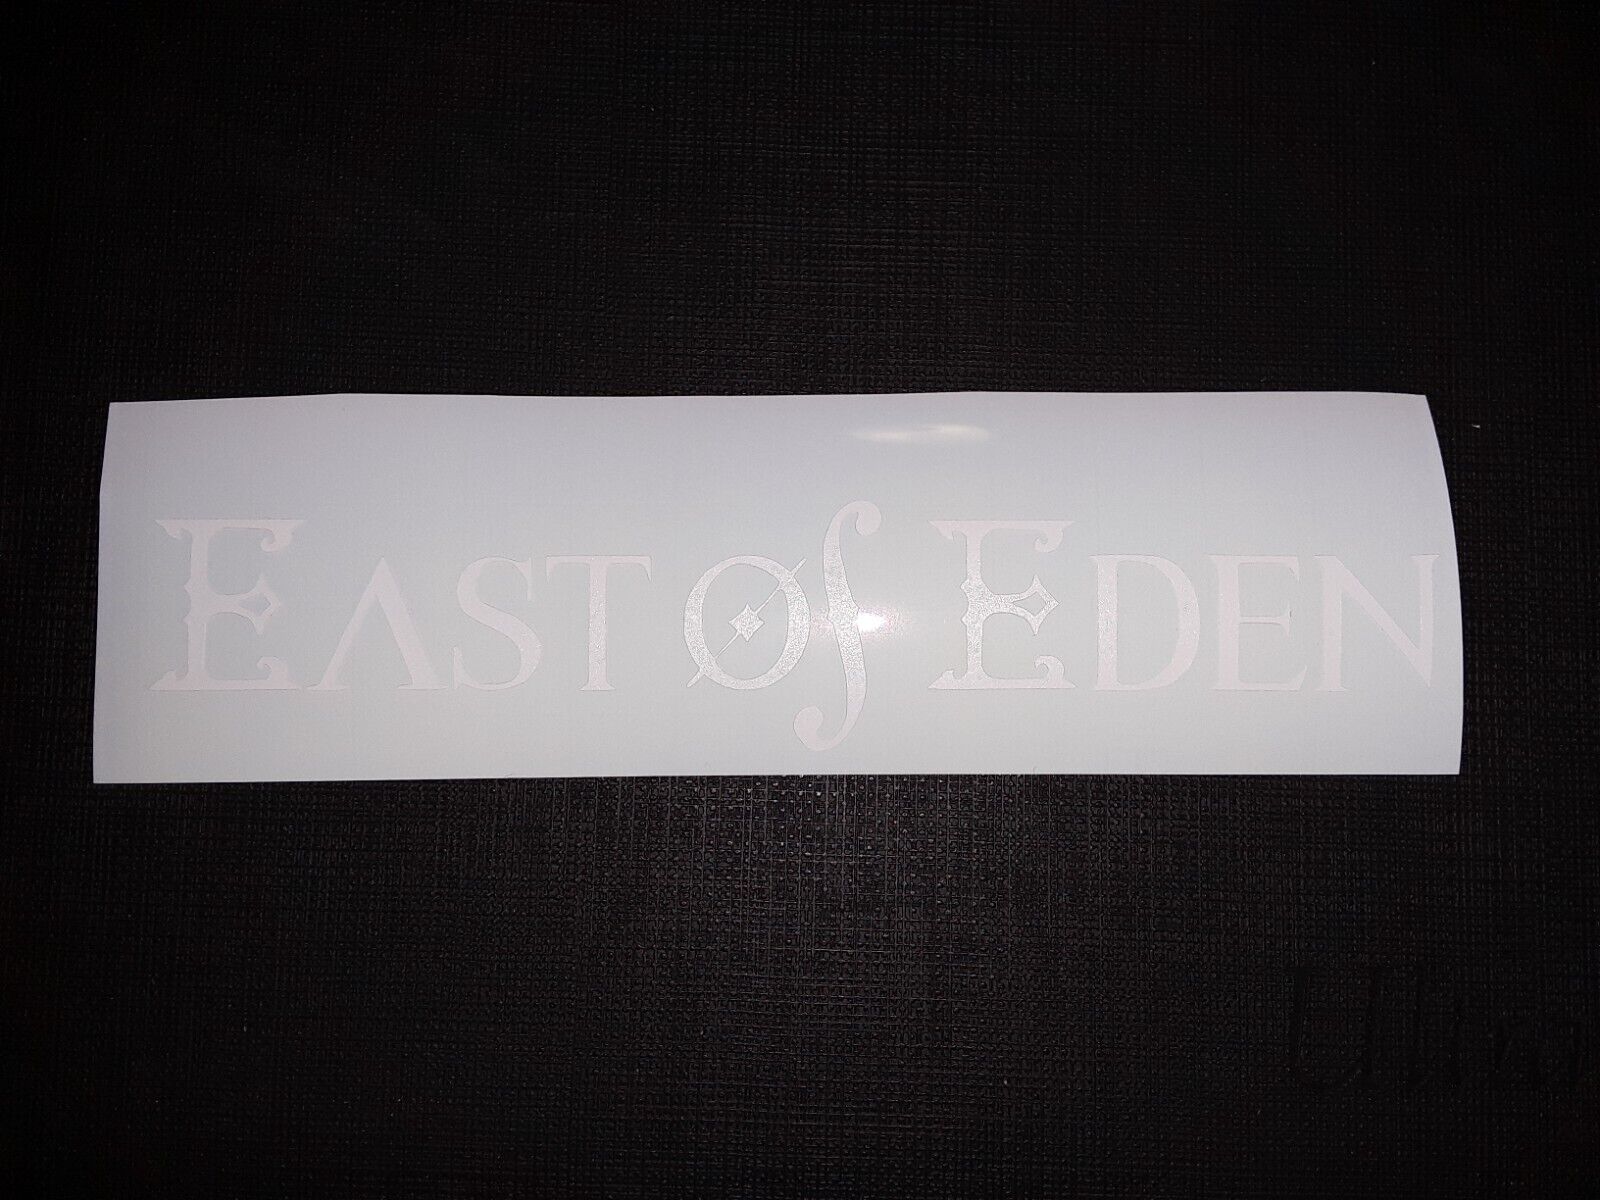 East of Eden Logo Name J-Rock Band Sticker Vinyl Decal Waterproof